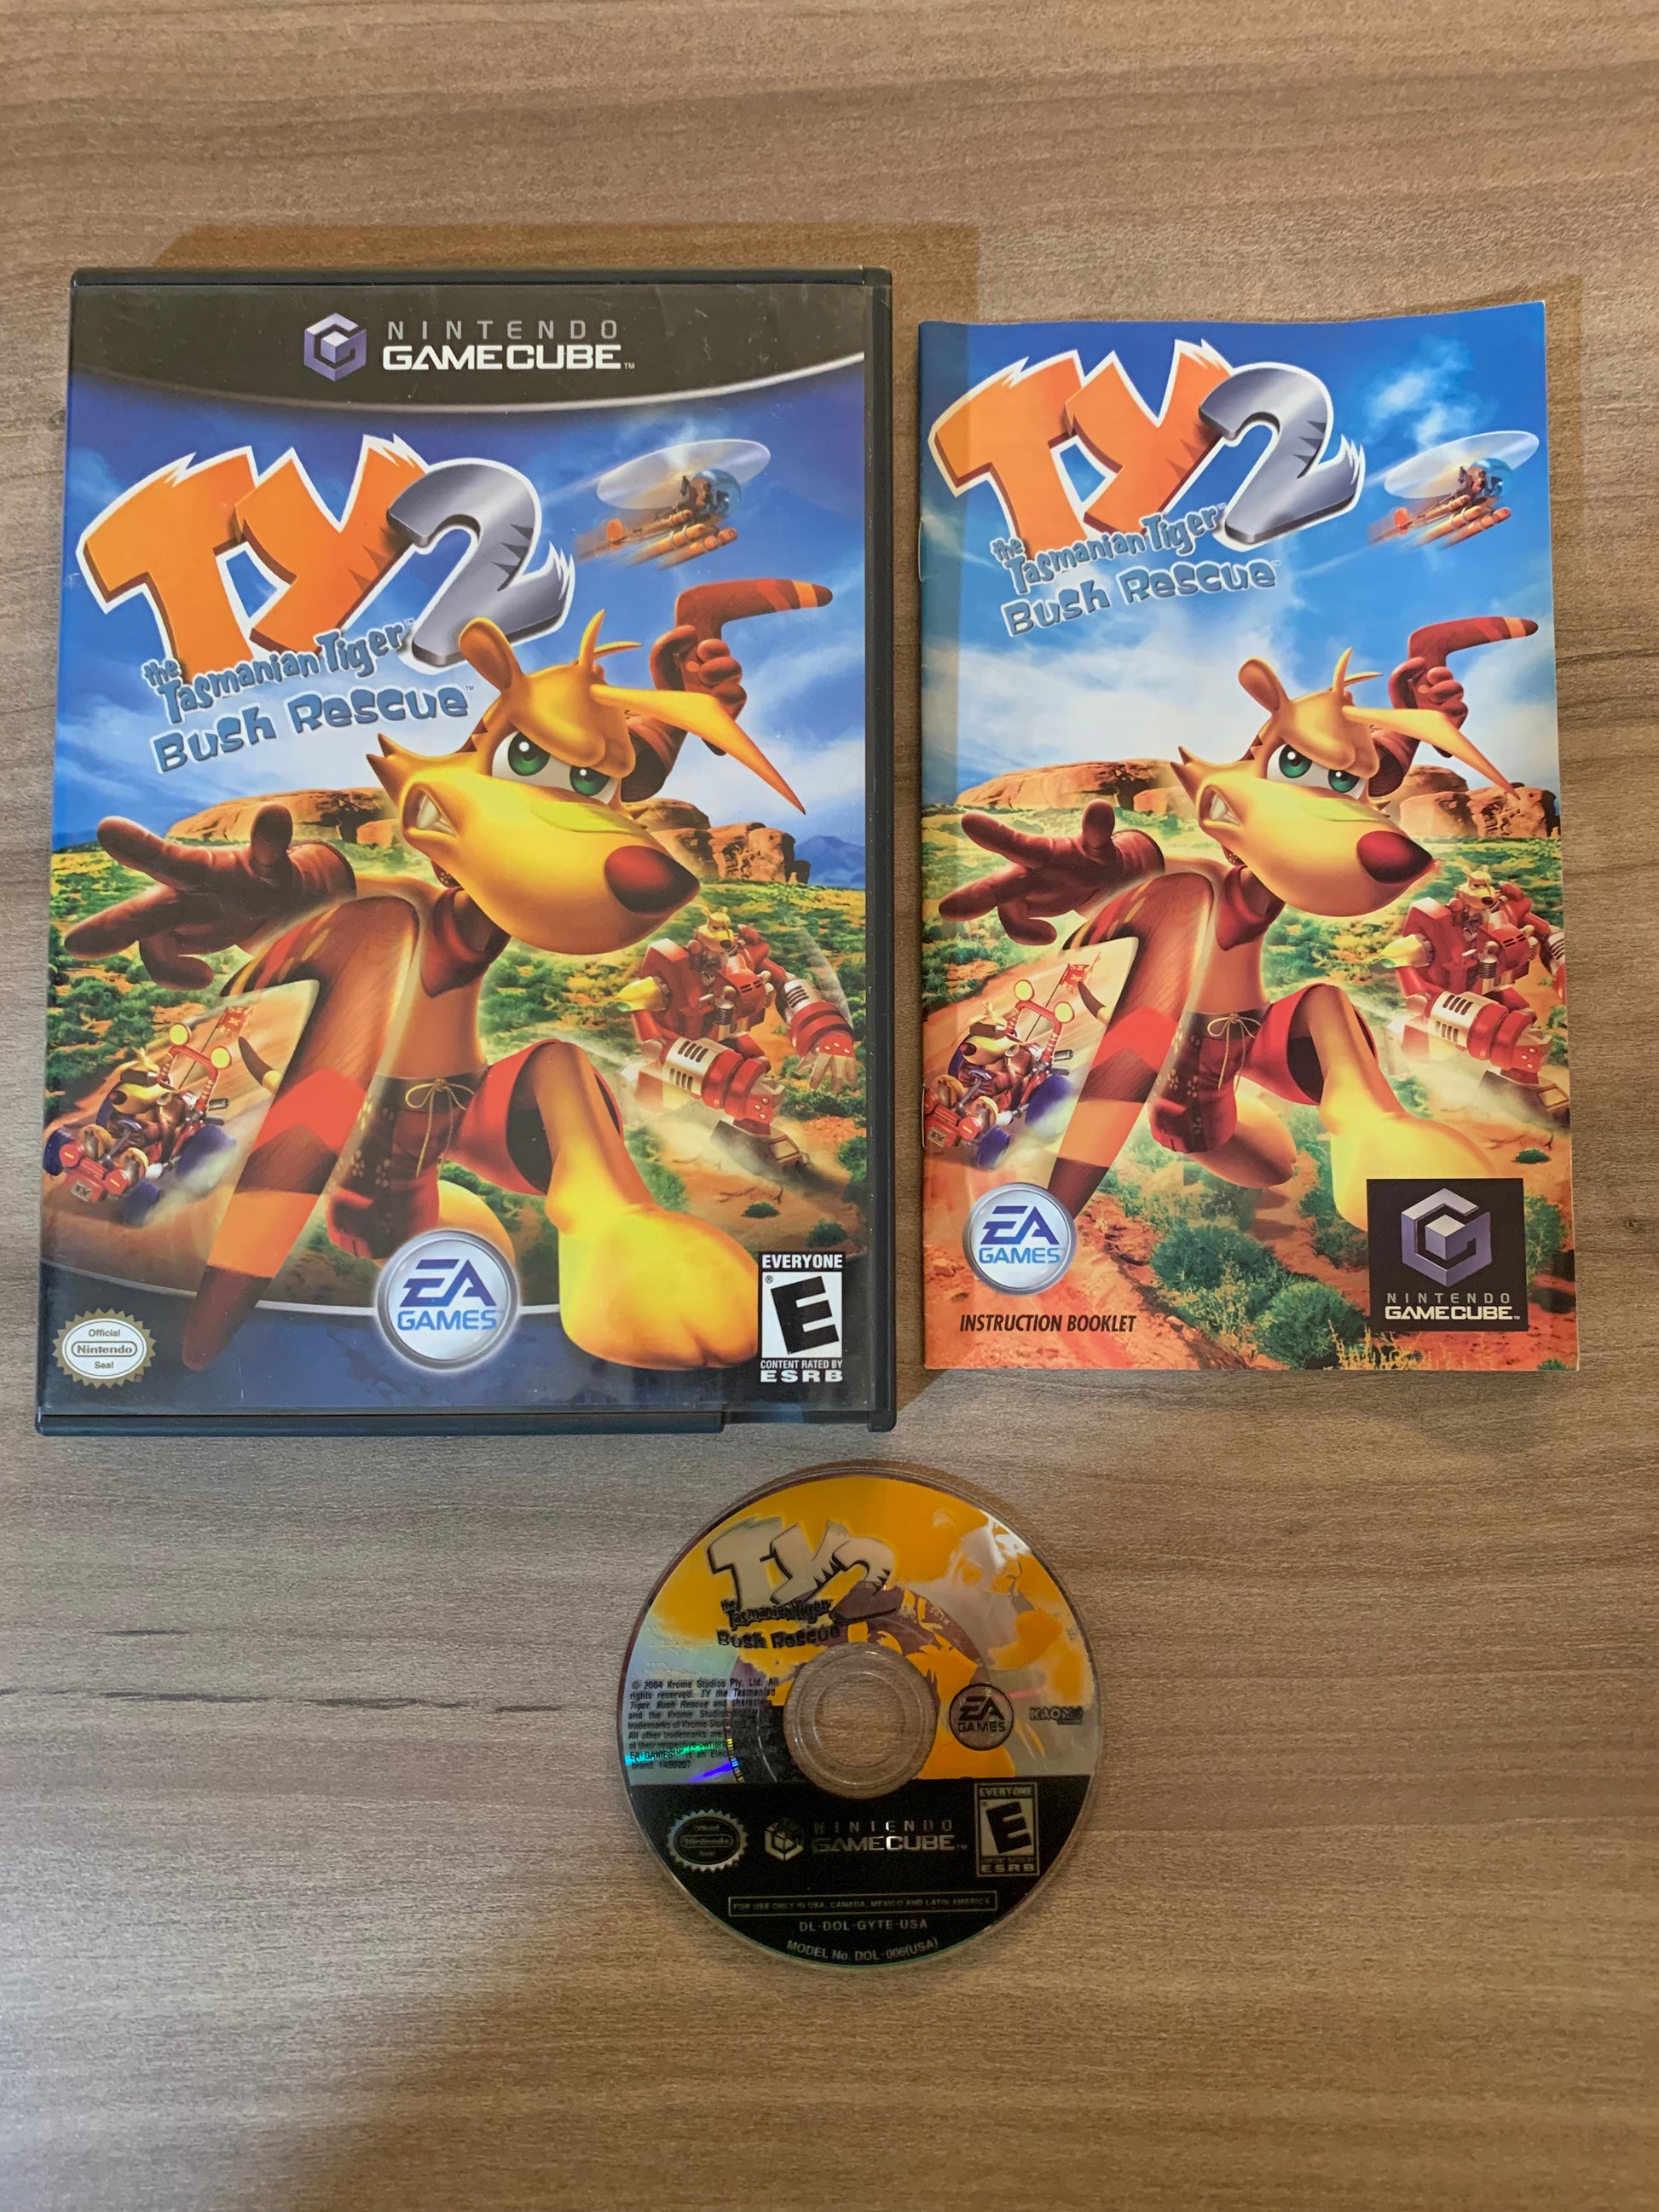 PiXEL-RETRO.COM : NINTENDO GAMECUBE TY THE TASMANIAN TIGER 2 BUSH RESCUE COMPLETE (CIB) BOX INSTRUCTION MANUAL GAME NTSC